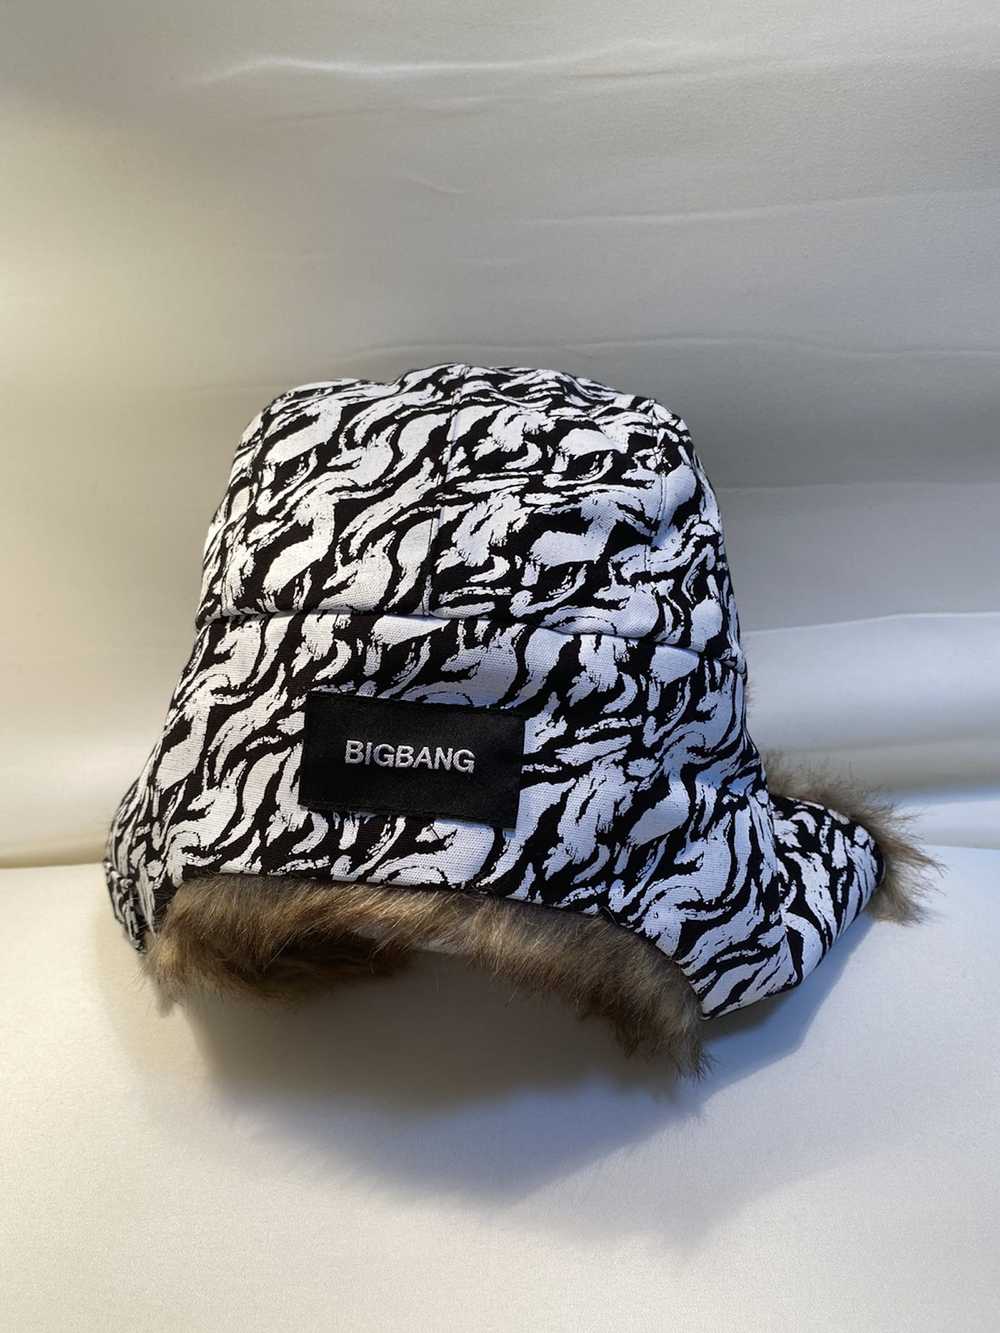 Japanese Brand Big bang winter hat - image 6